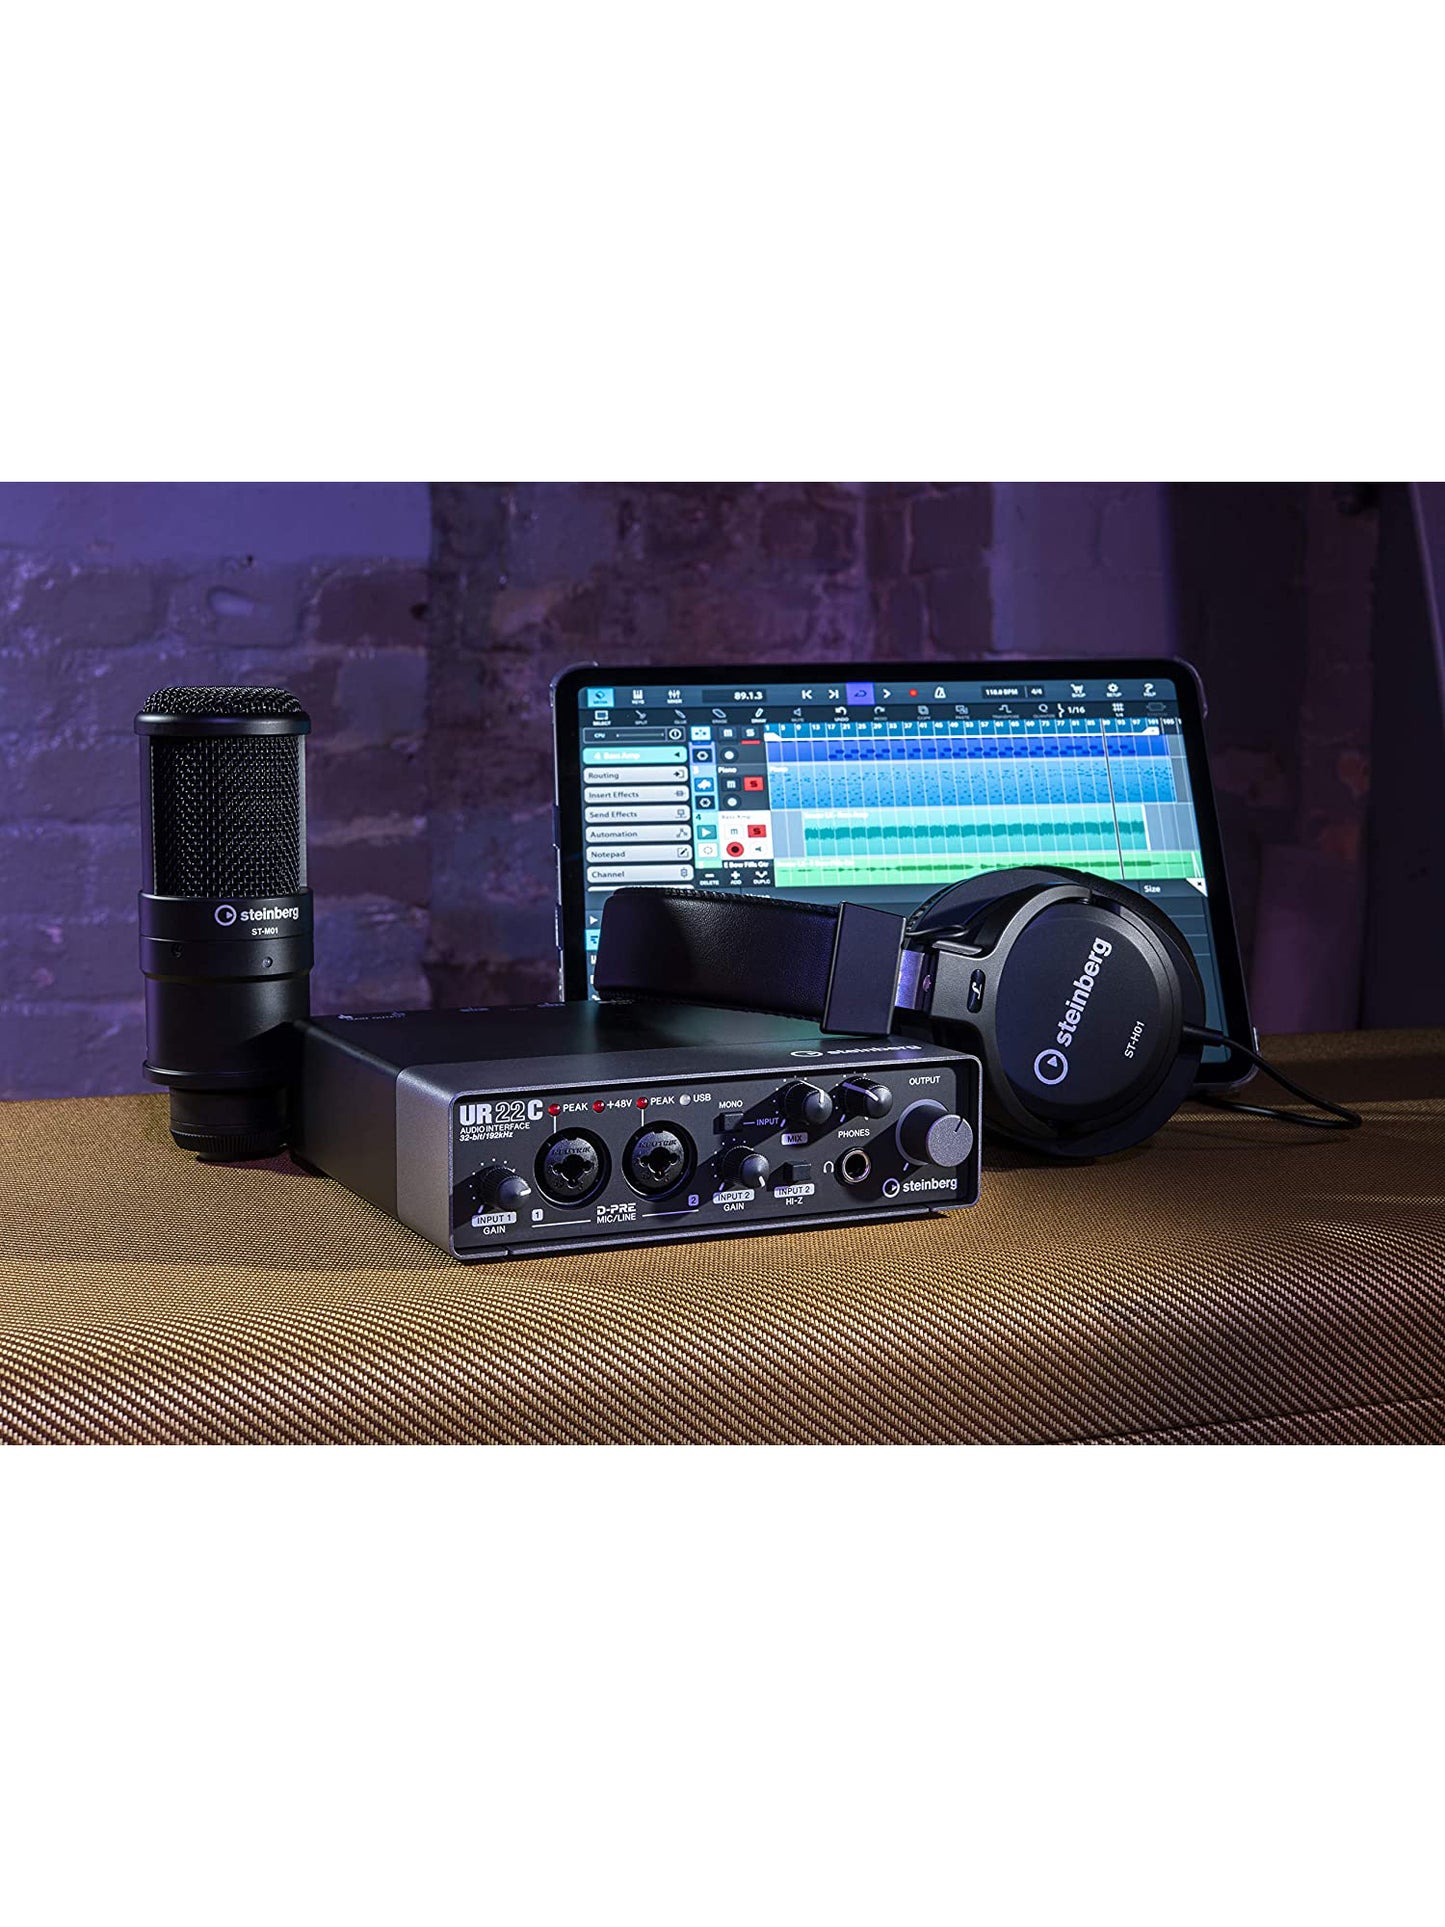 Steinberg UR22C-R-PACK RECORDING PACK USB Audio Interface